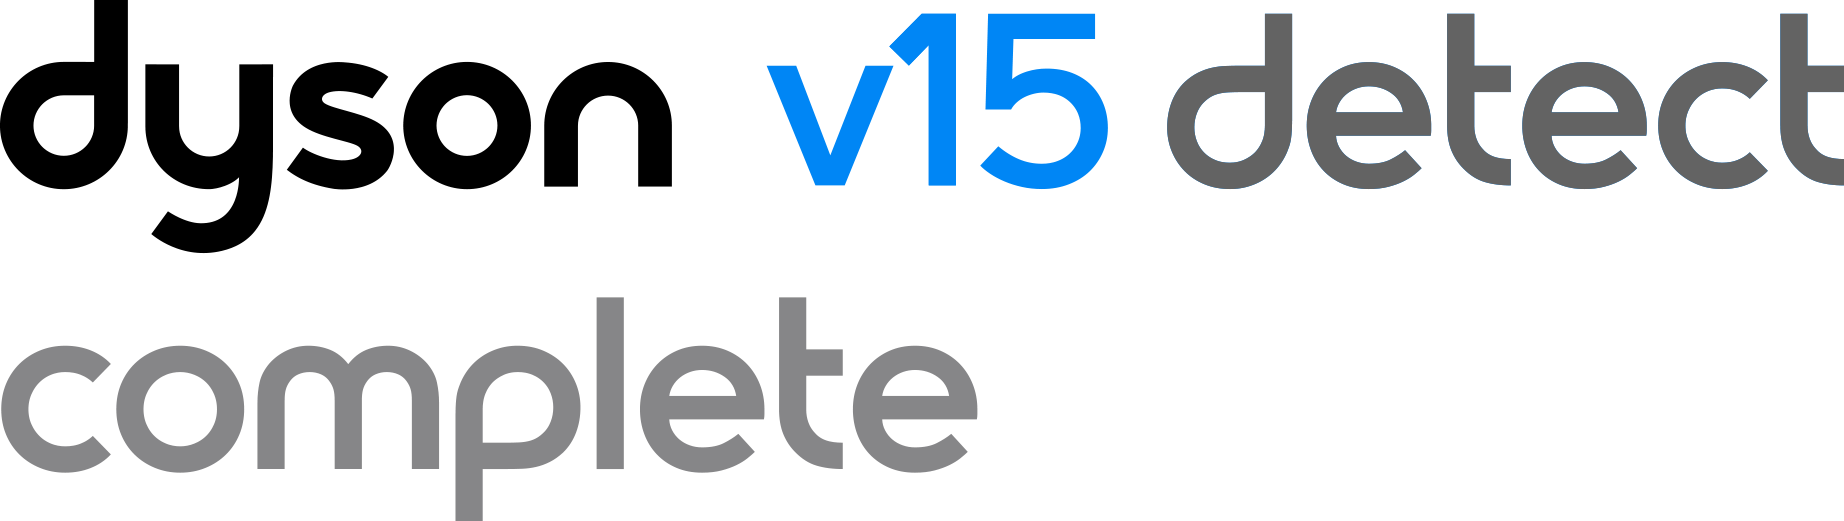 Dyson V15 Detect Complete logo